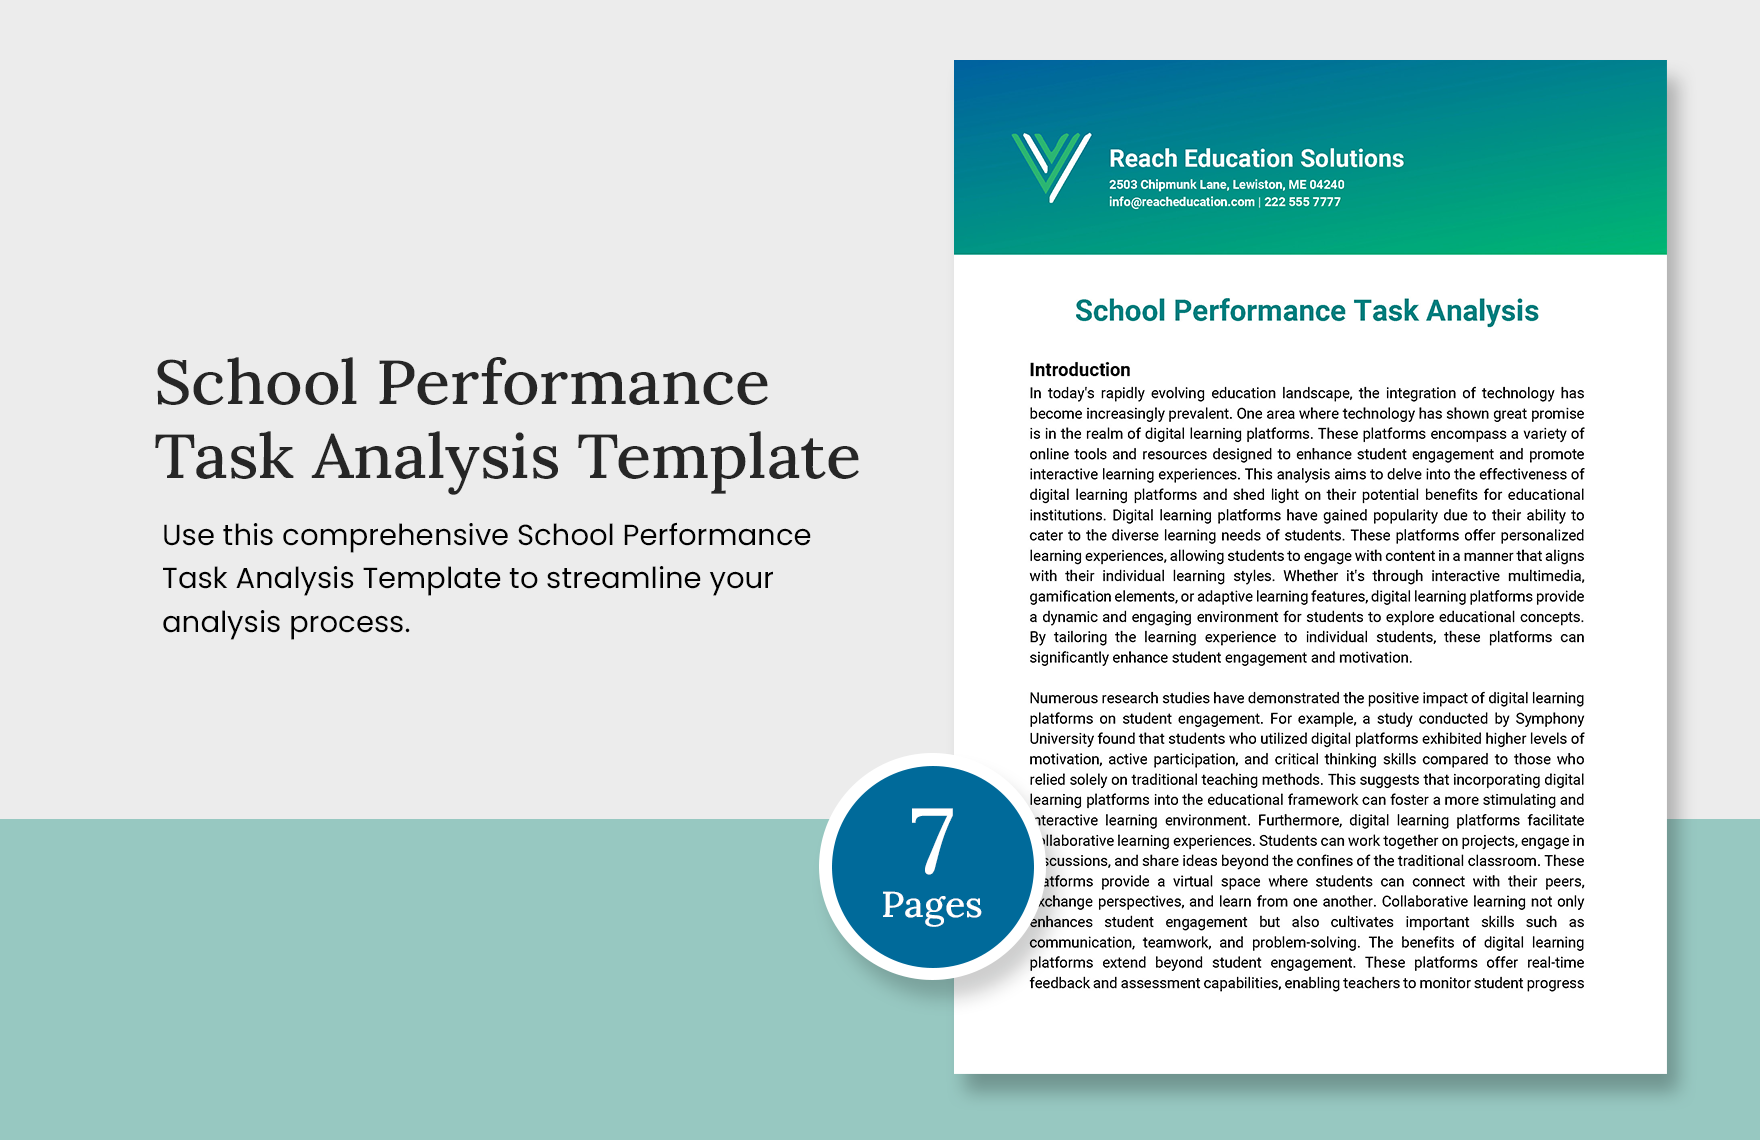 School Performance Task Analysis Template in Word, Google Docs